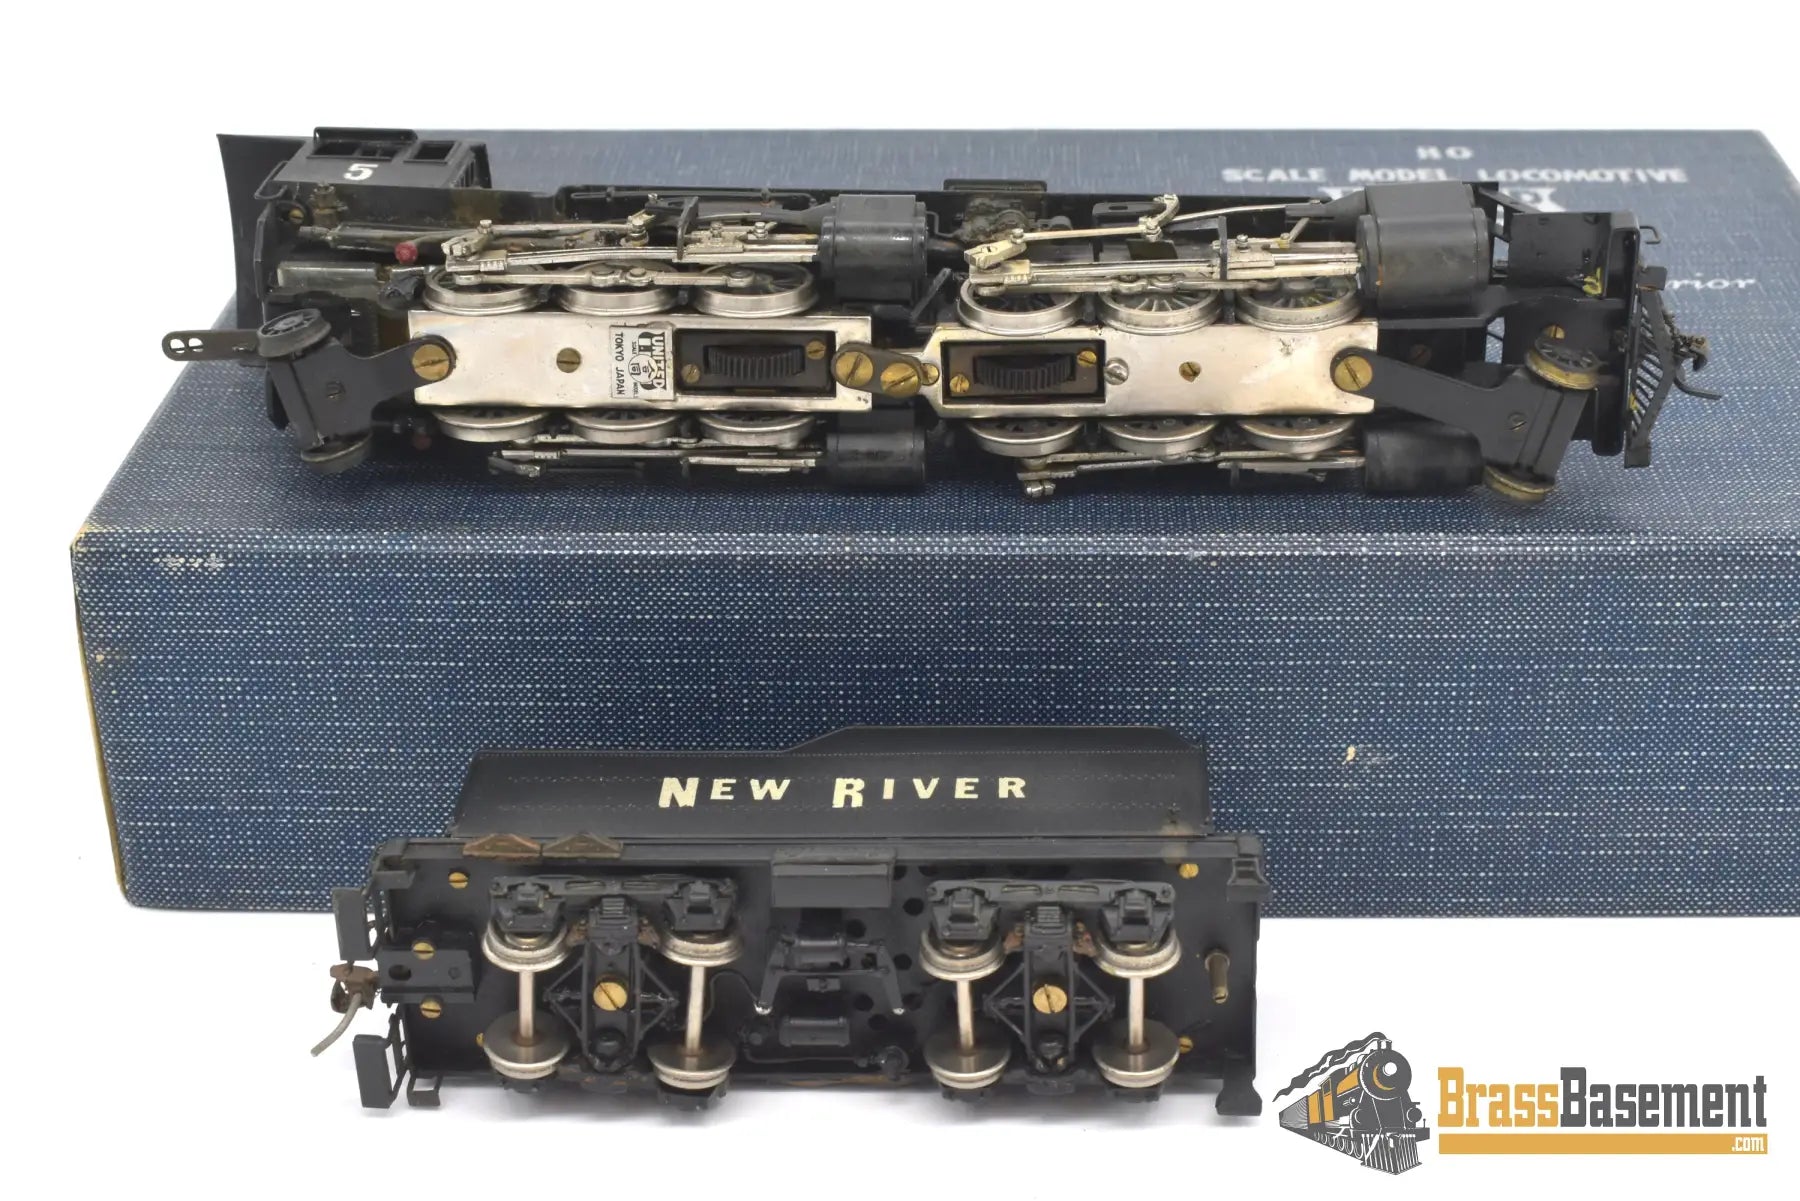 Ho Brass - Pfm Sierra 2 - 6 - 6 - 2 Mallet As ’New River Rr’ #5 Custom Paint Nice Steam